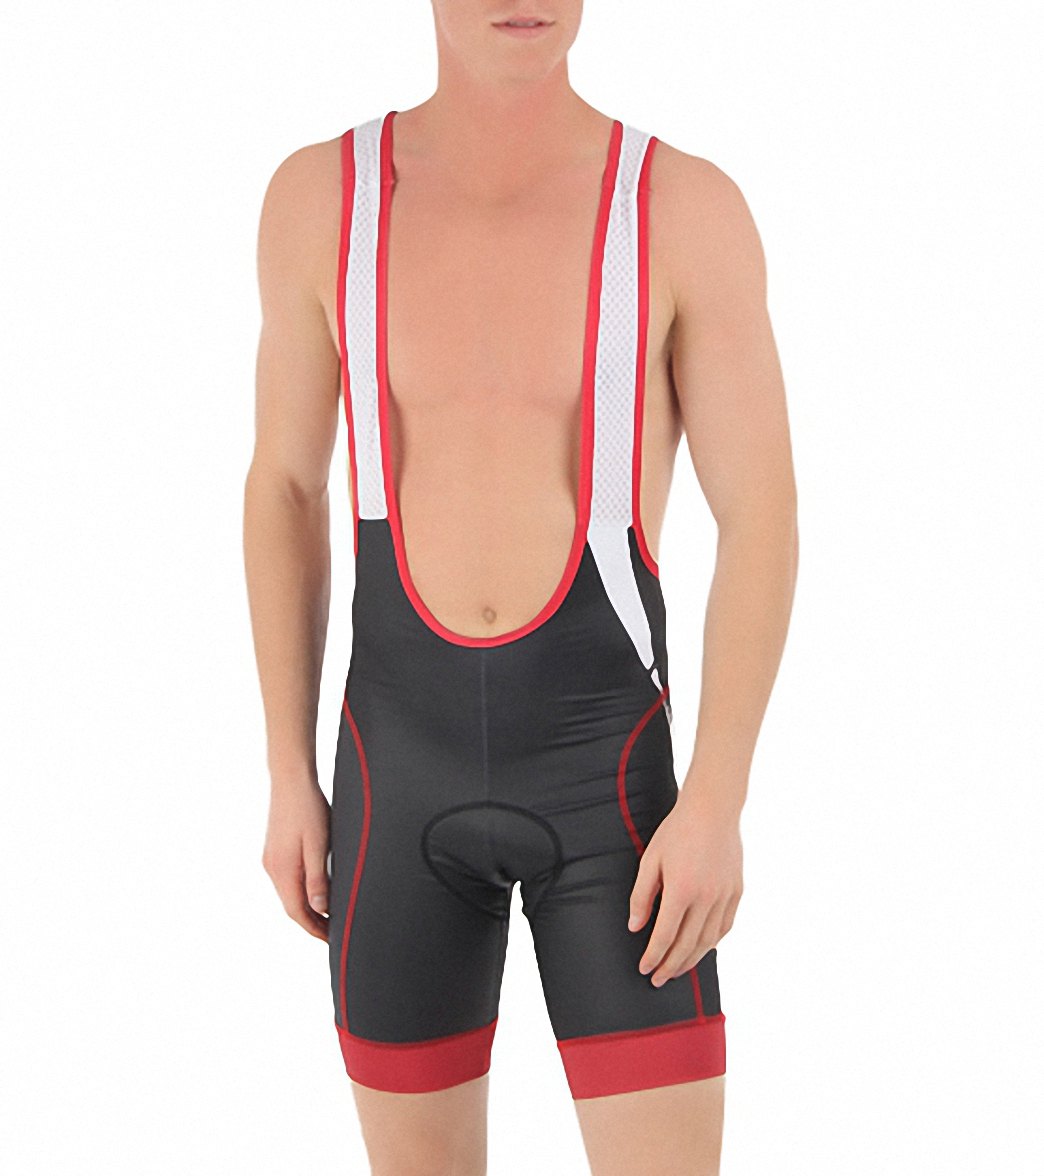 Download Hincapie Sportswear Men's Edge Cycling Bib Short at ...